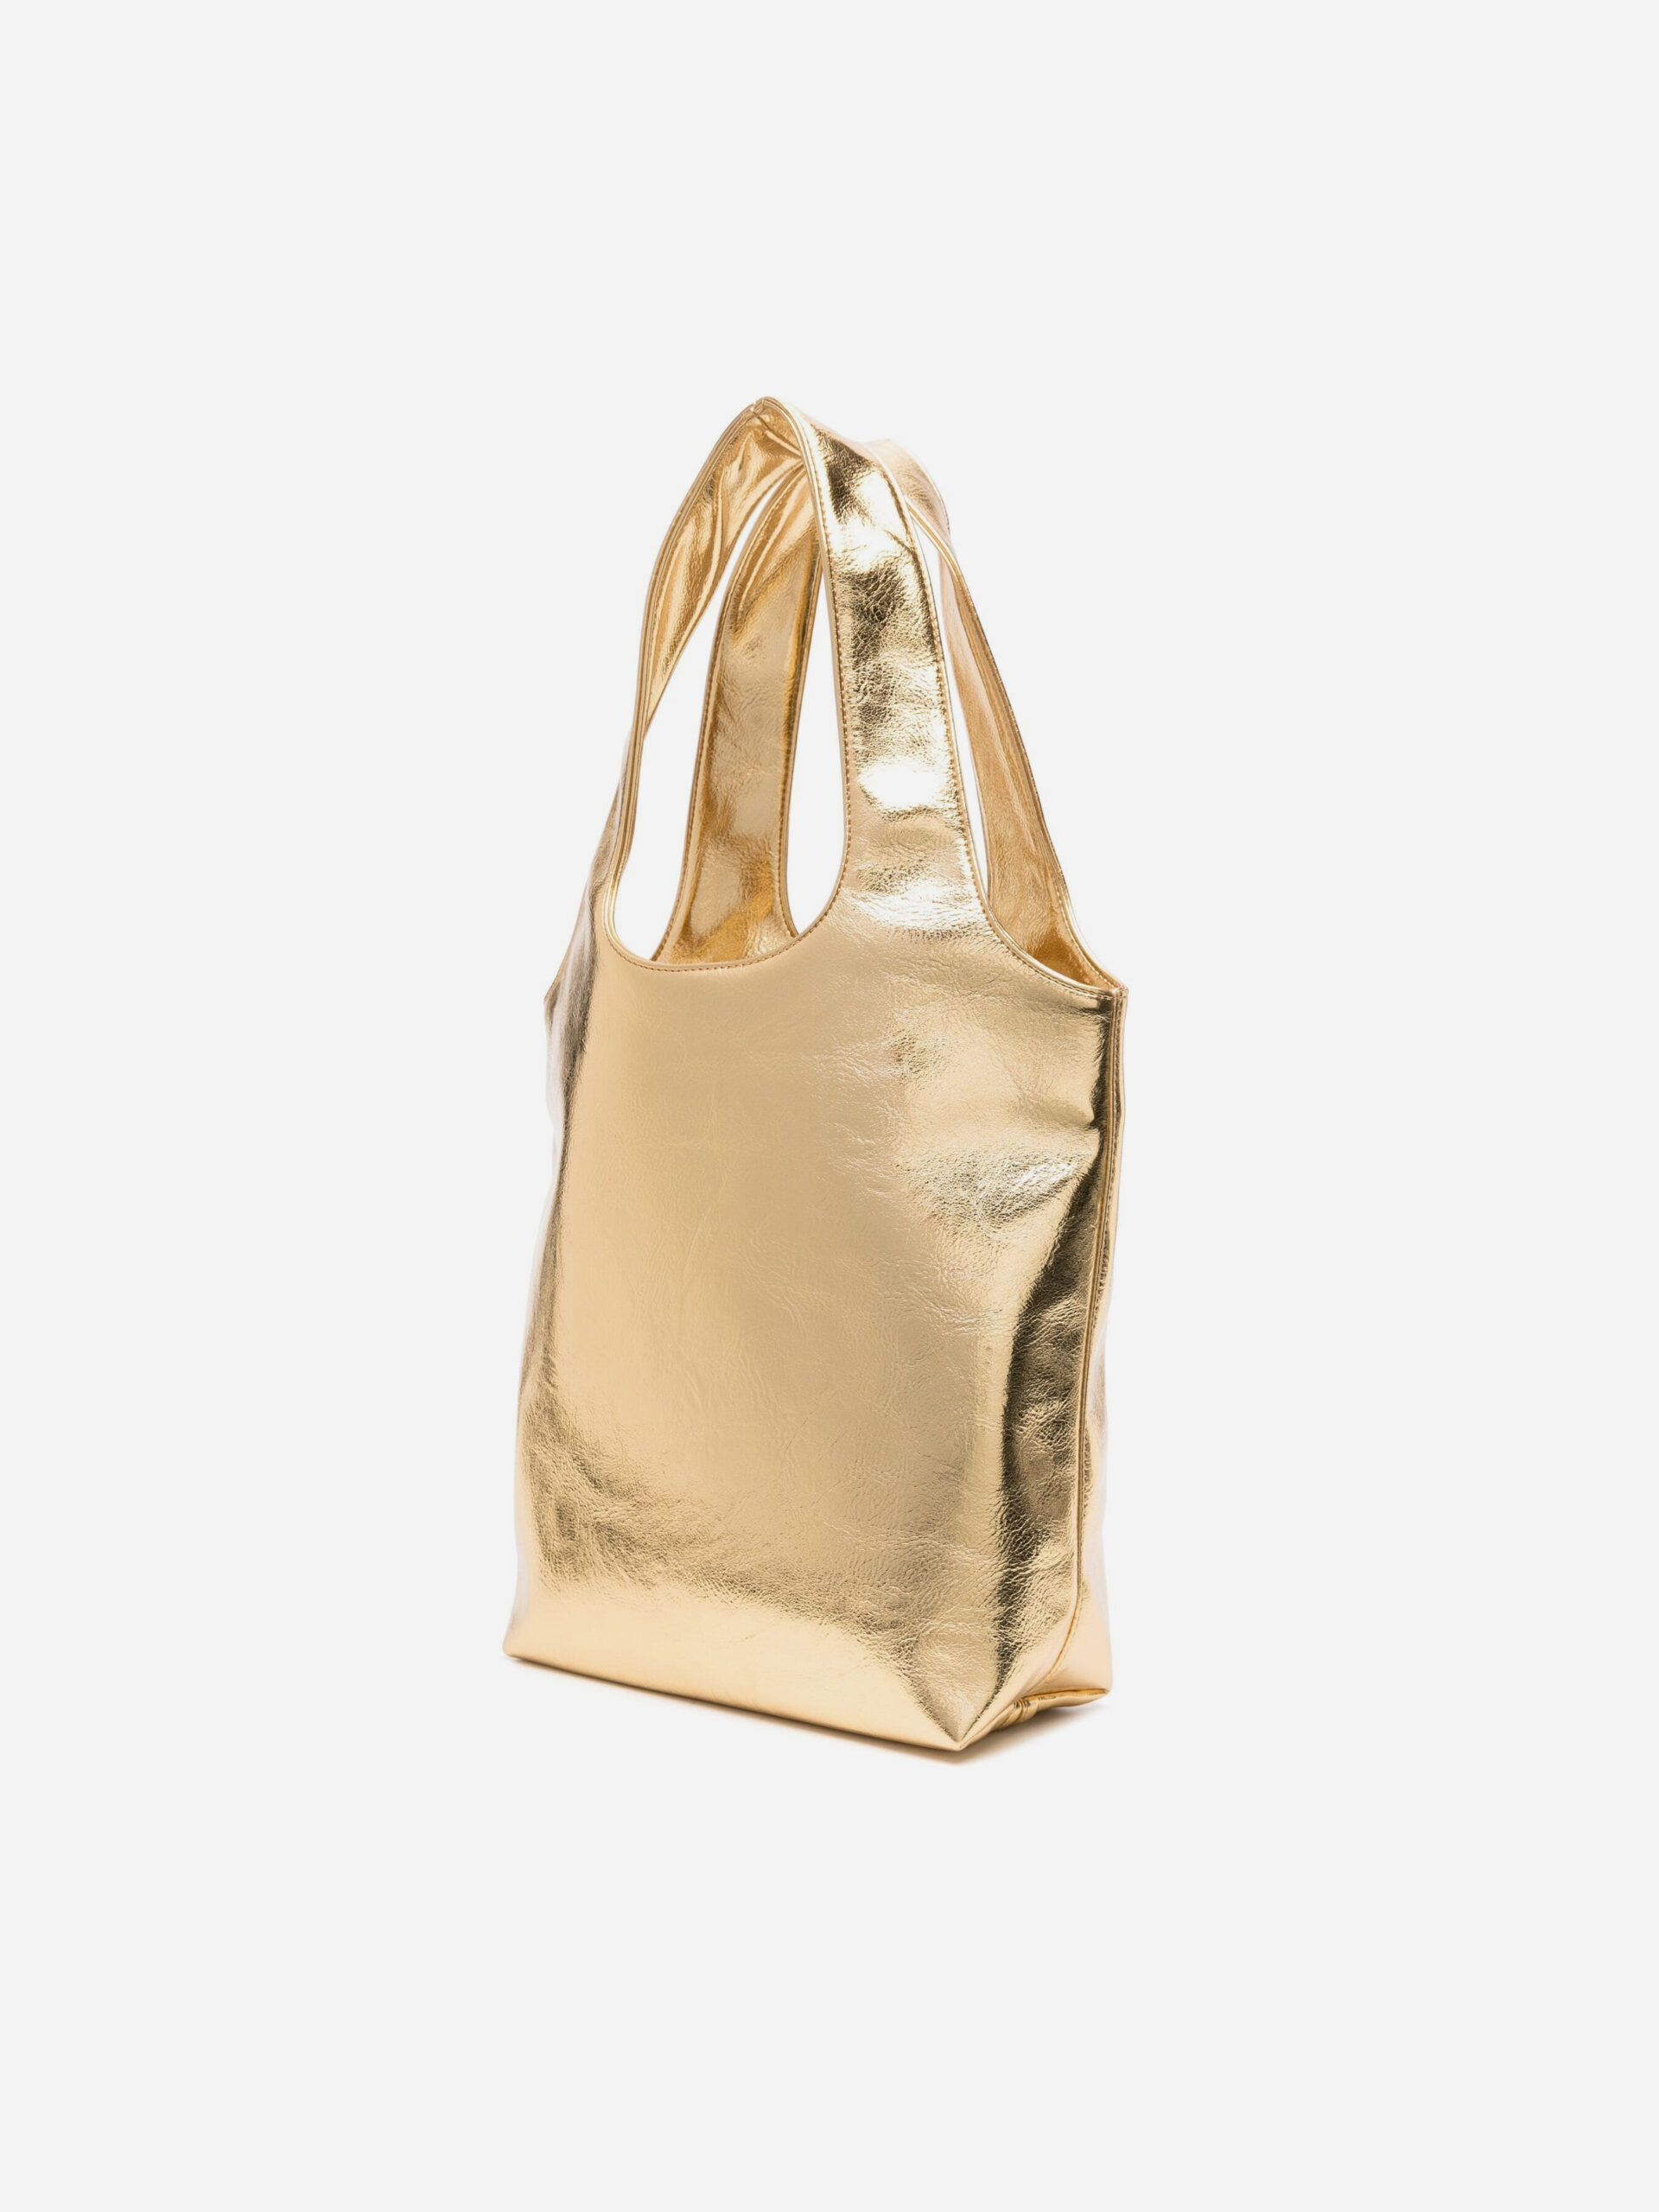 ninon-gold-metallic-print-tote-bag-logo-vegan-leather-apc-paris-matchboxathens